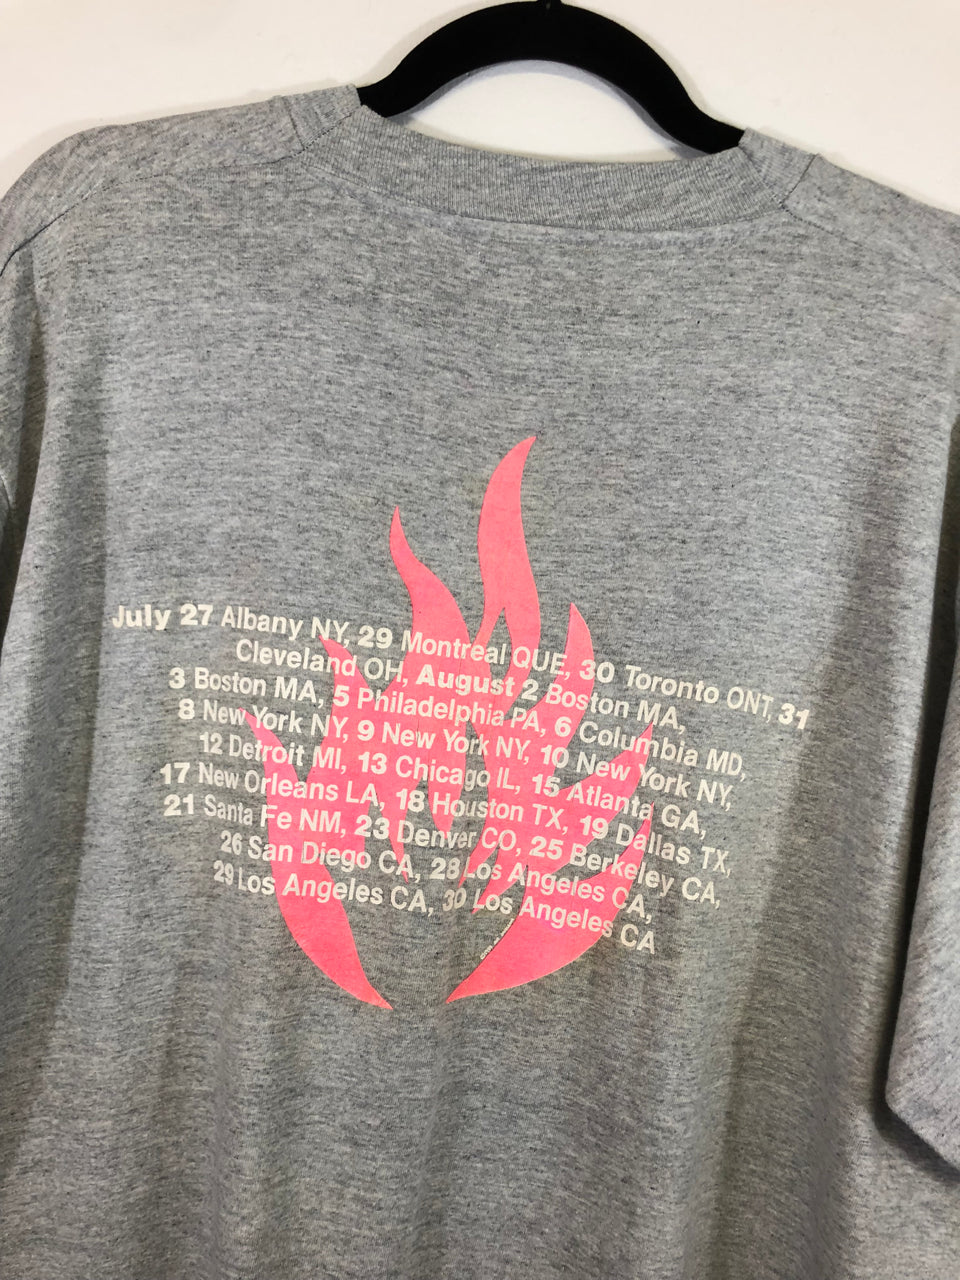 Joe Jackson Blaze of Glory Tour T-Shirt